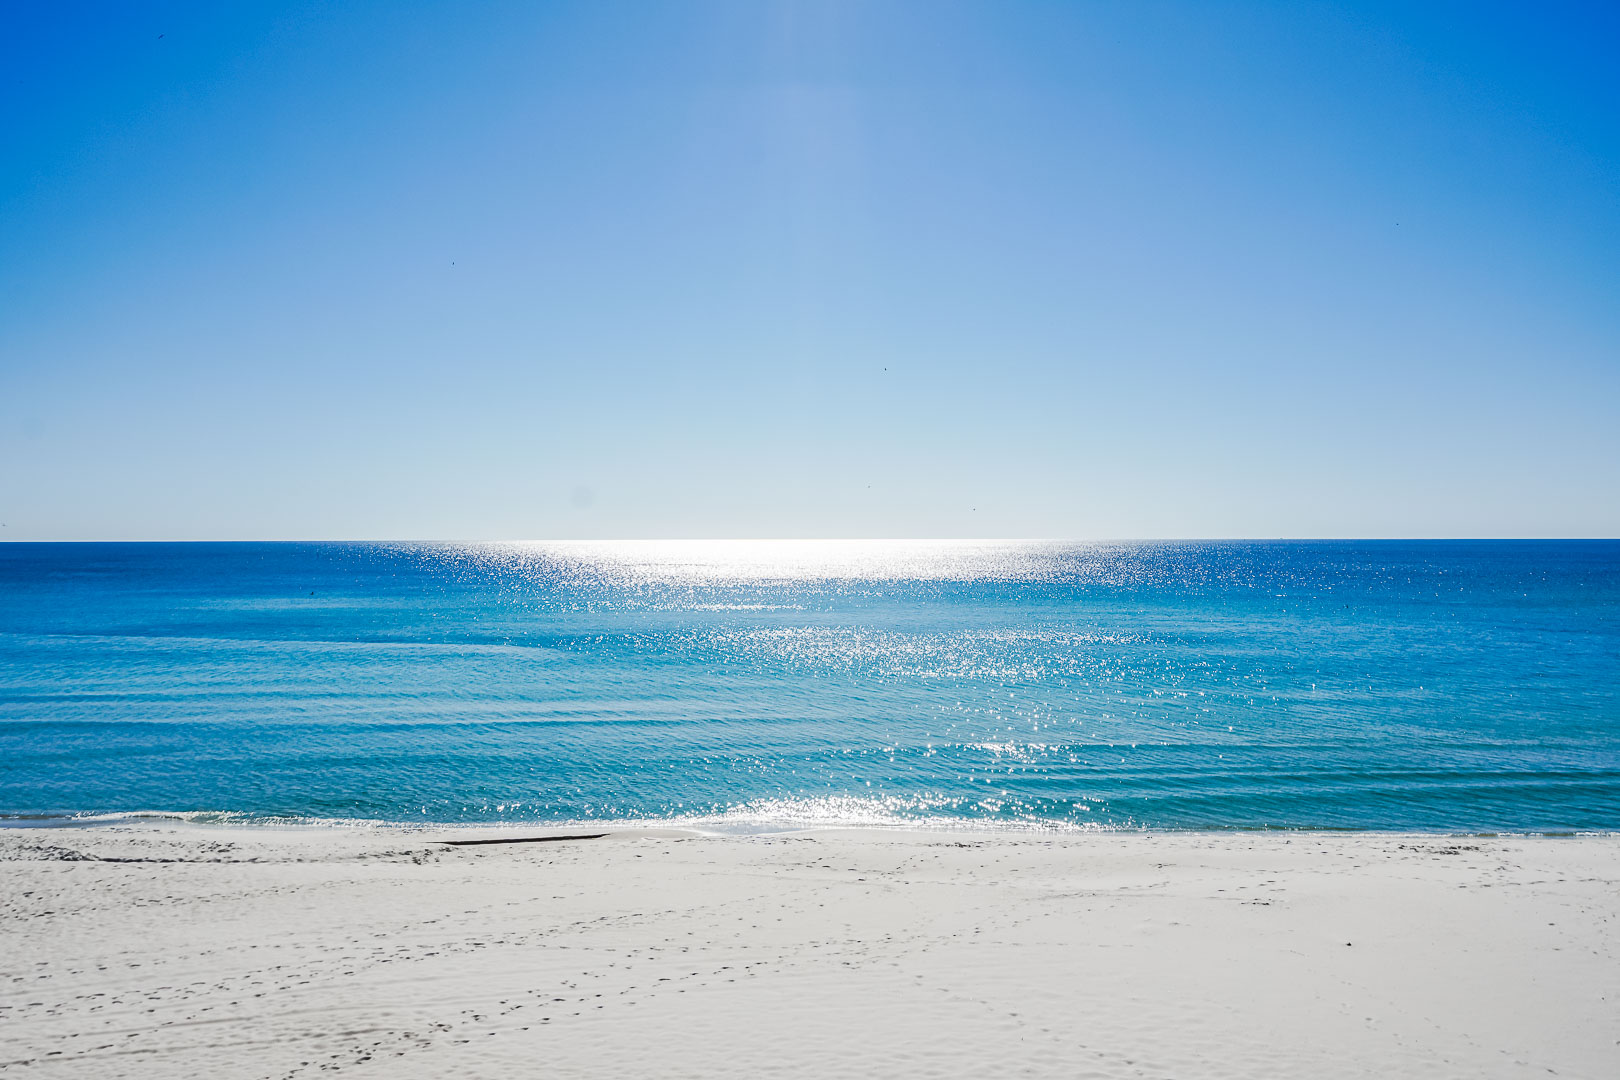 A pristine beach view from VRI's Panama City Resort & Club in Florida.